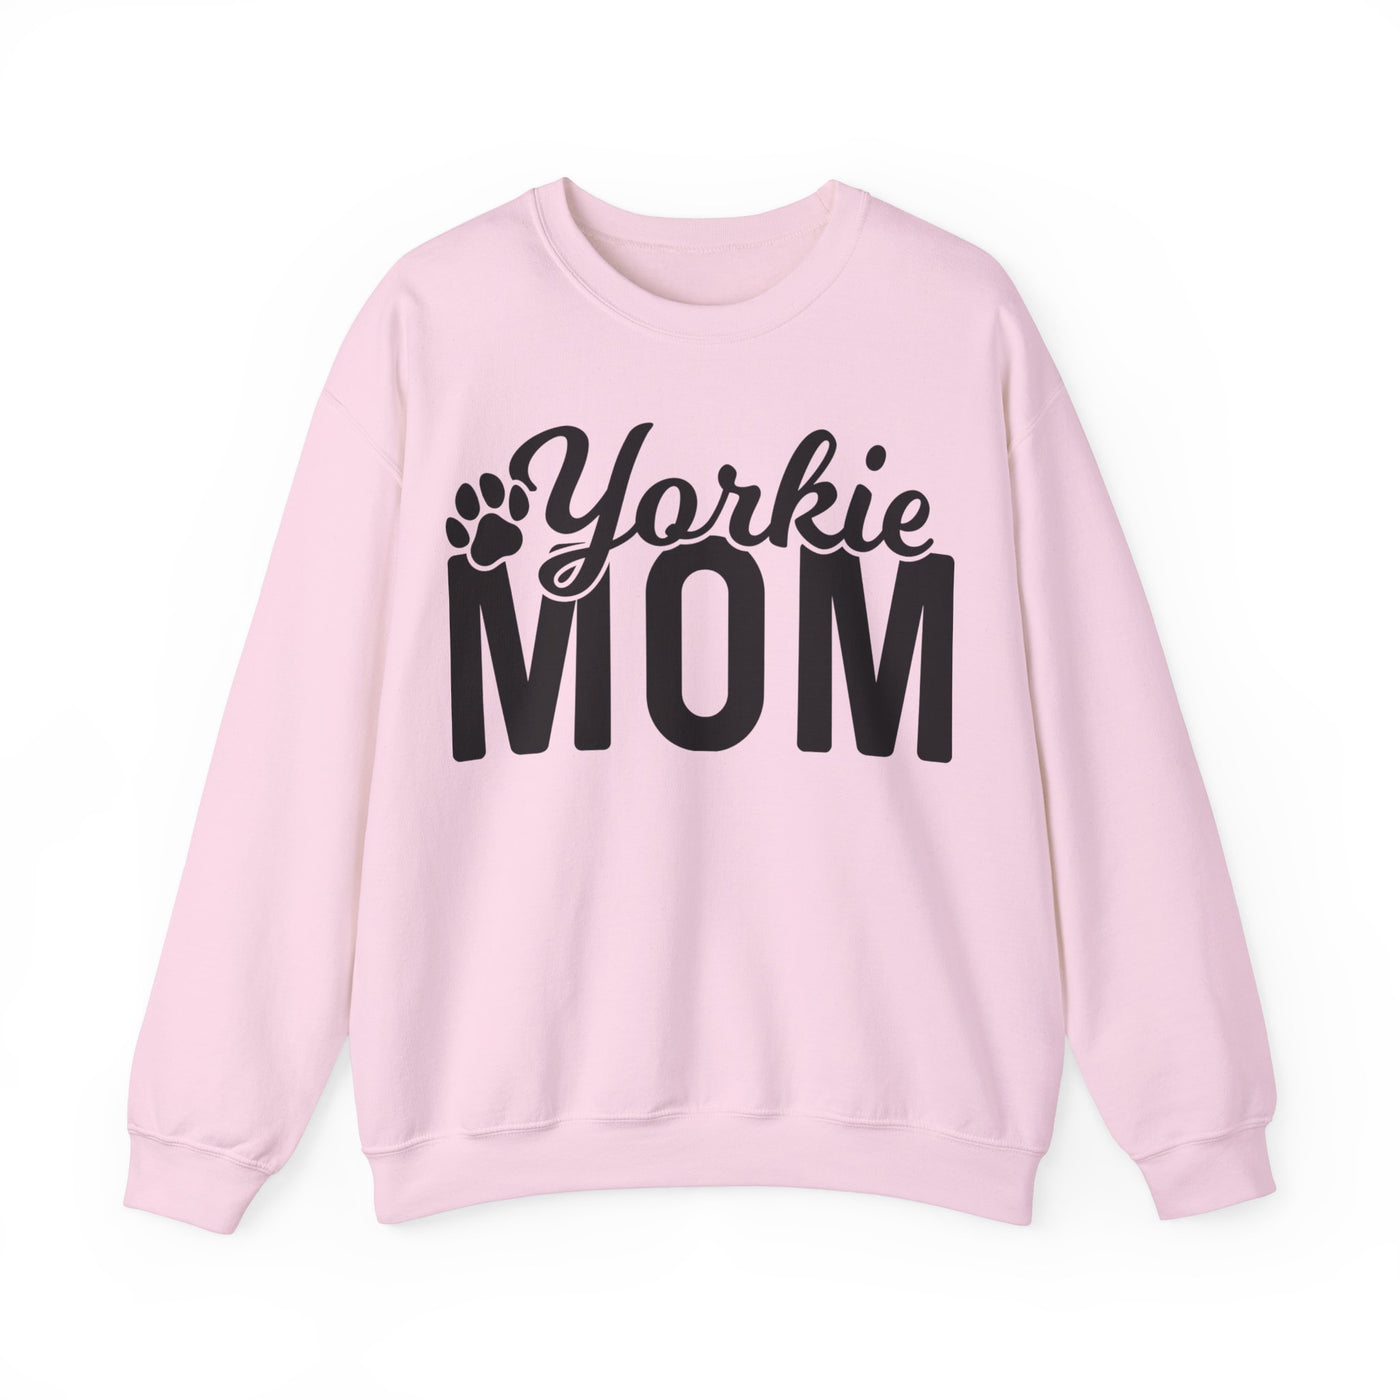 Yorkie Mom Sweatshirt